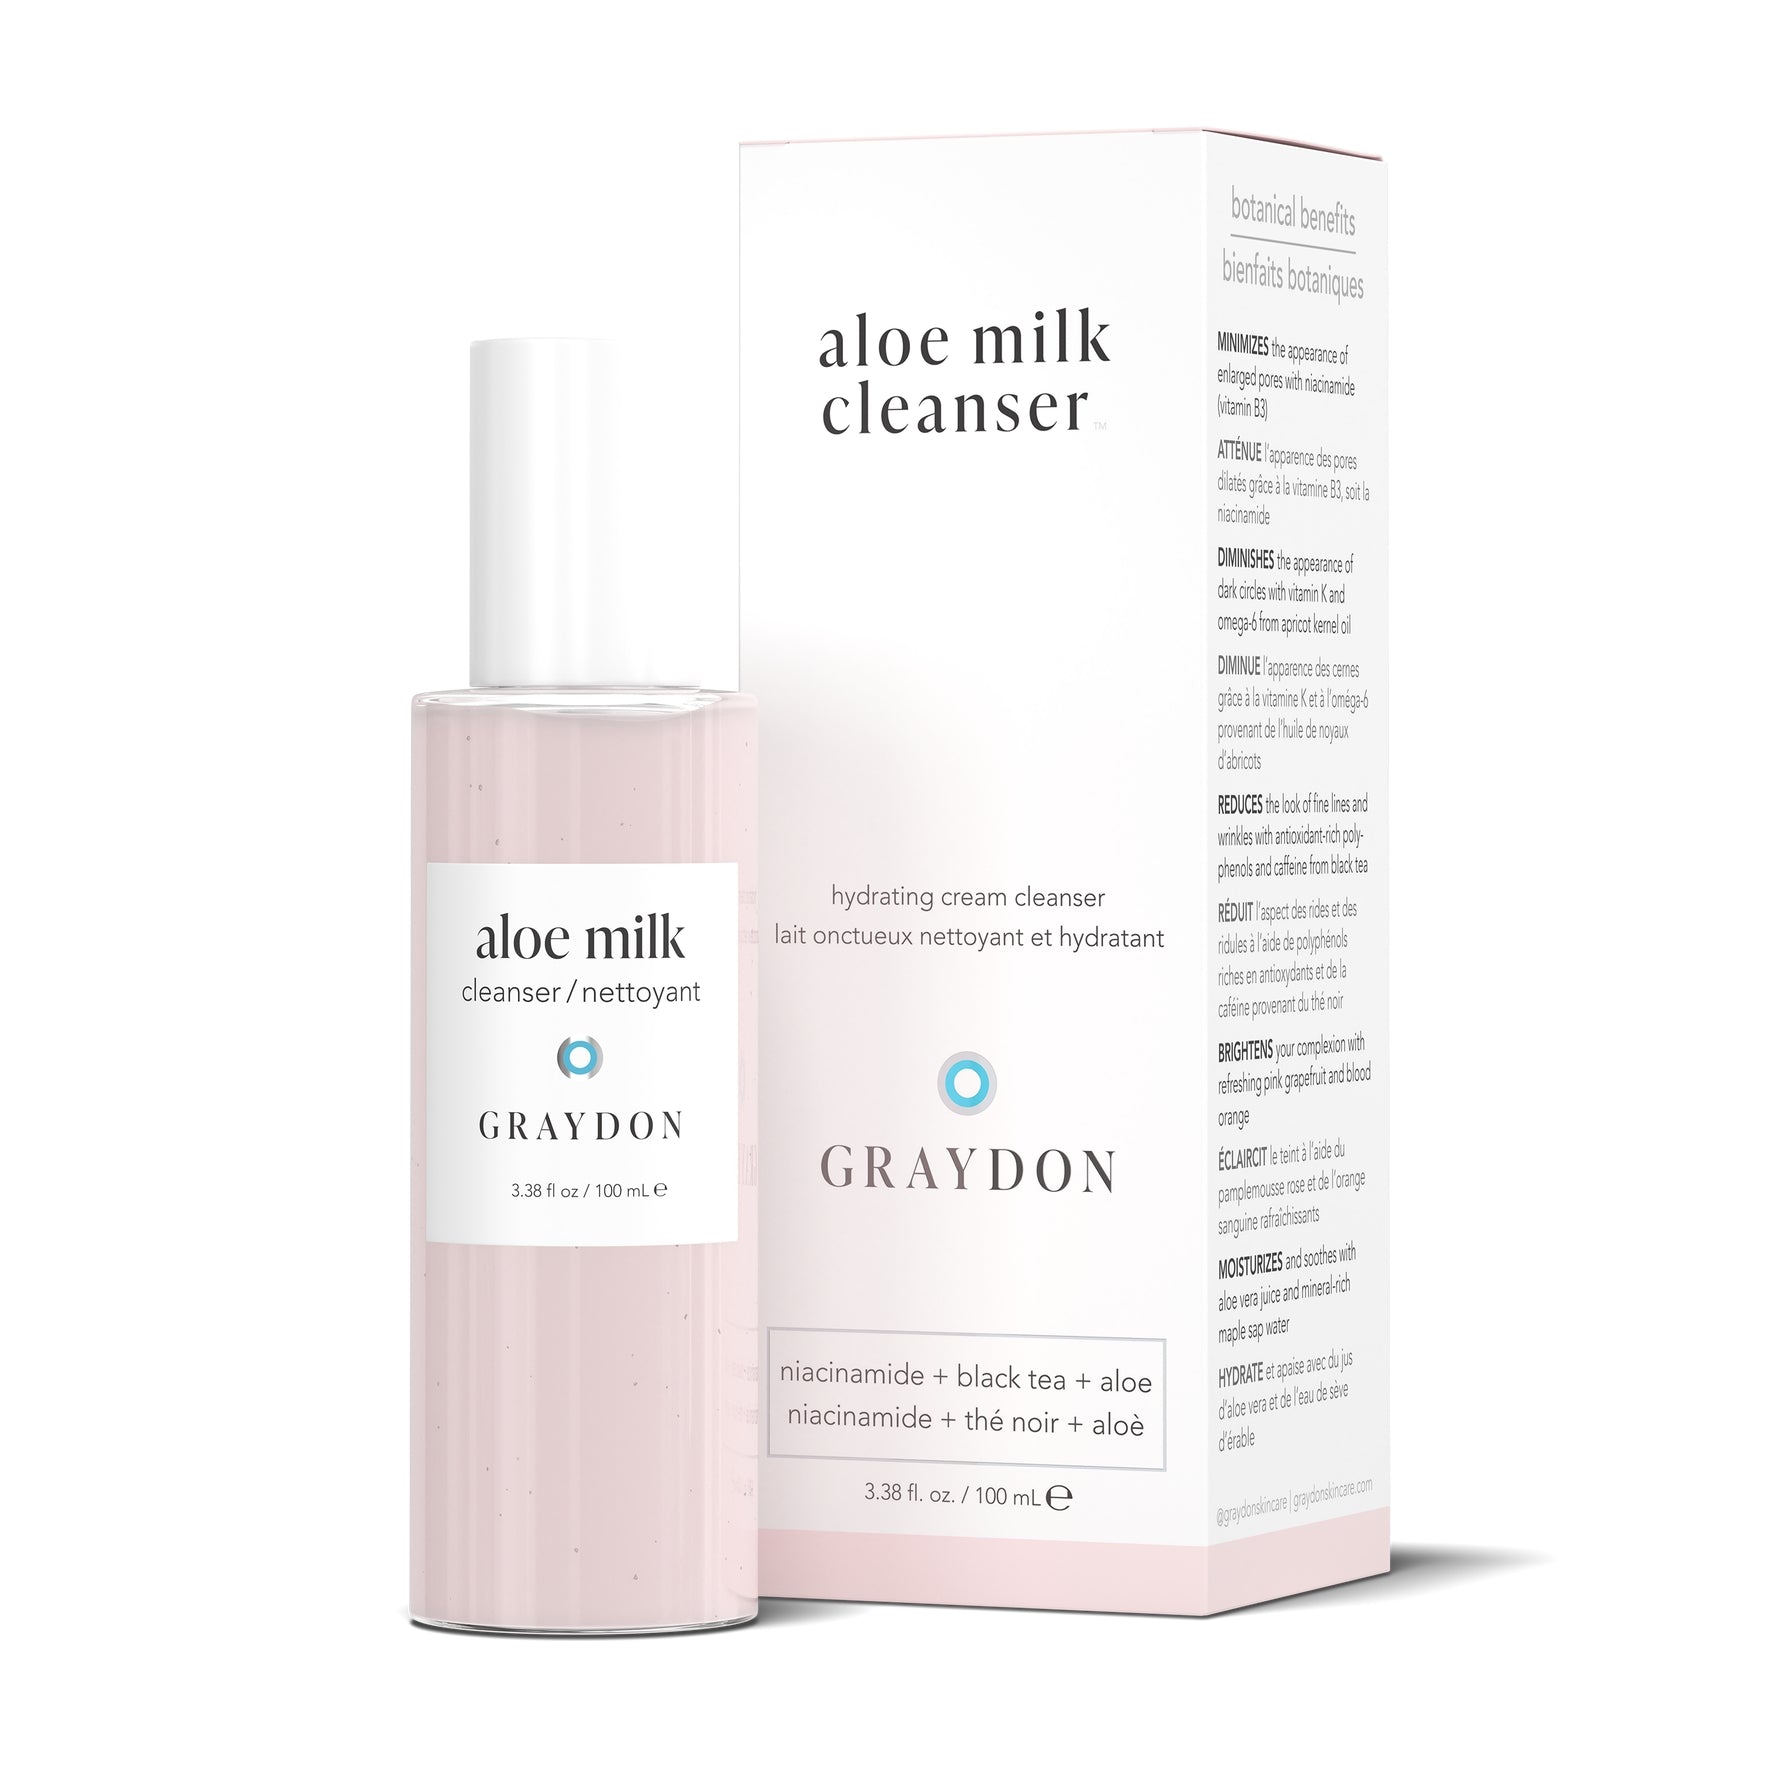 Graydon Aloe Milk Cleanser | Hydrating Cream Cleanser